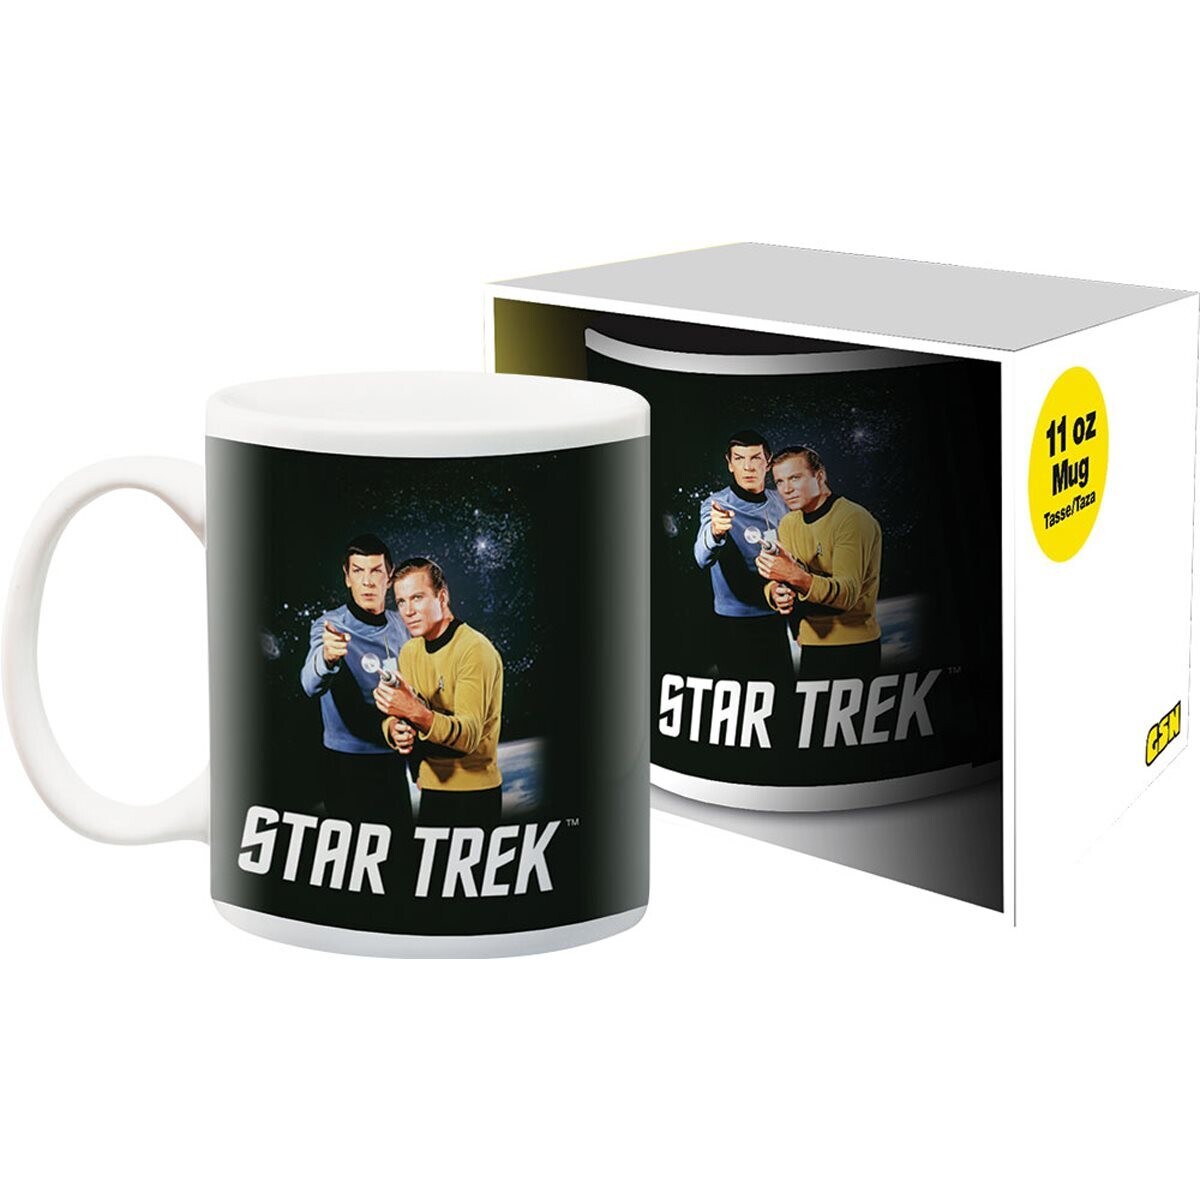 Star Trek Kirk and Spock 11 oz. Ceramic Mug